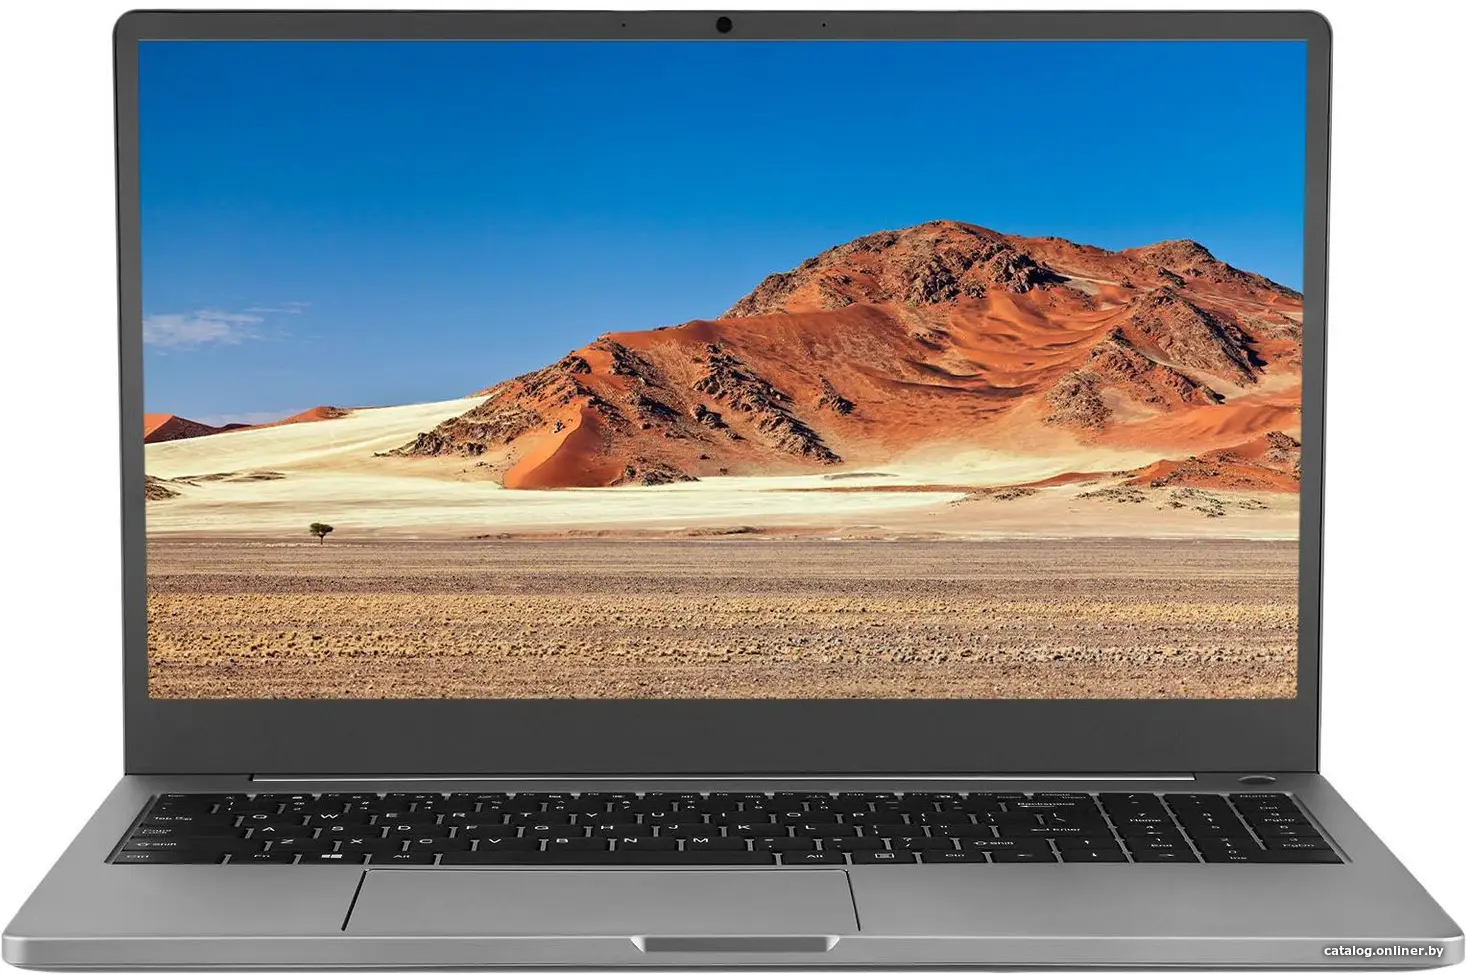 Купить Ноутбук Rombica MyBook Zenith (PCLT-0018), цена, опт и розница